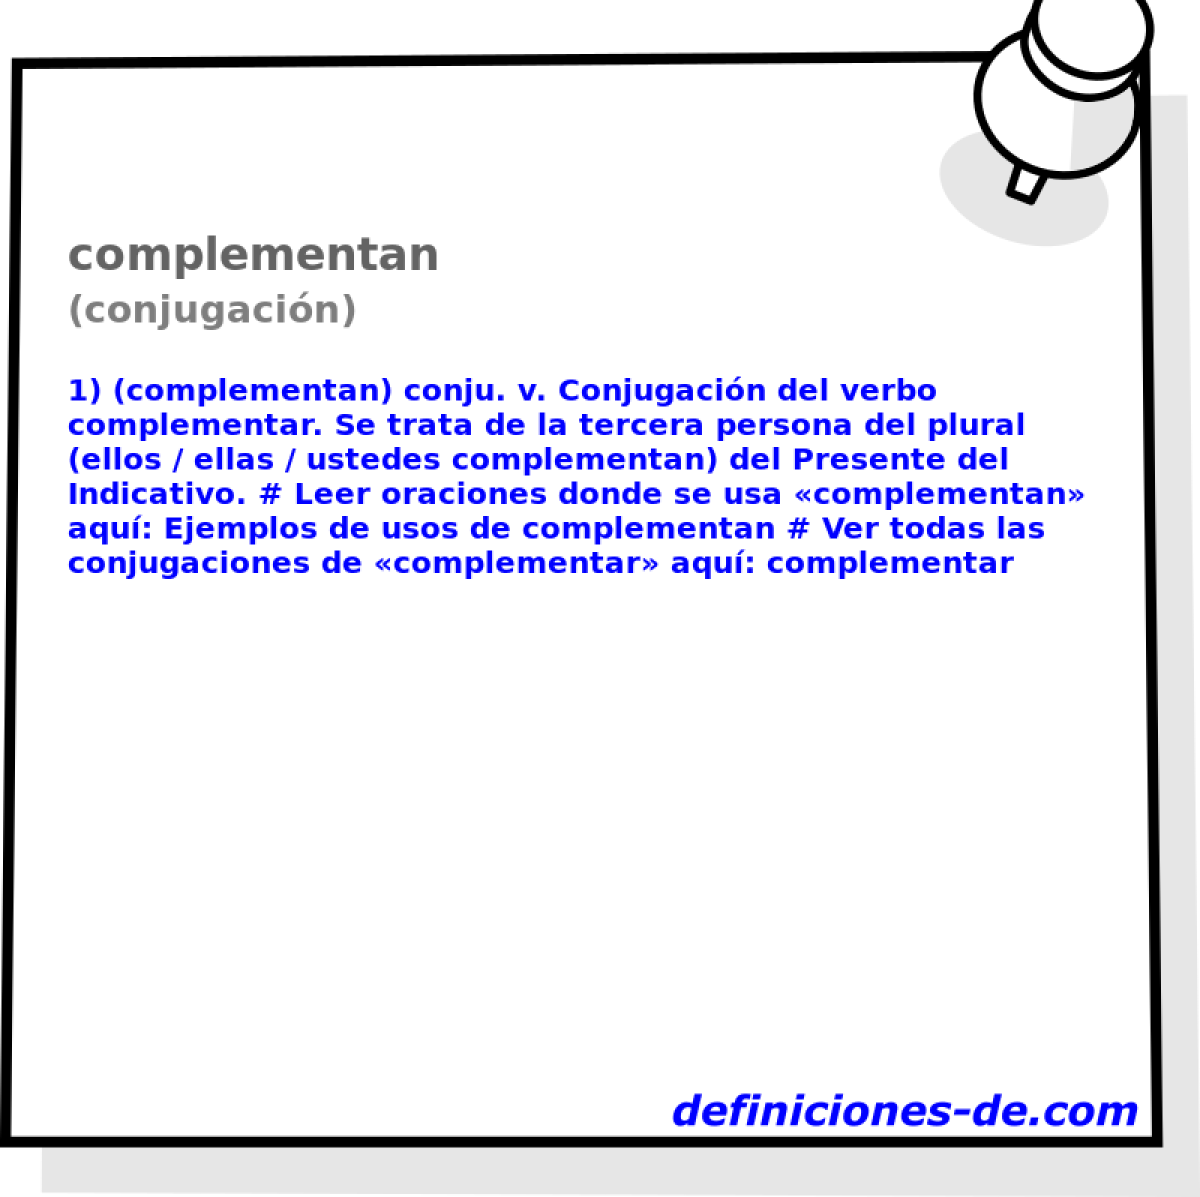 complementan (conjugacin)